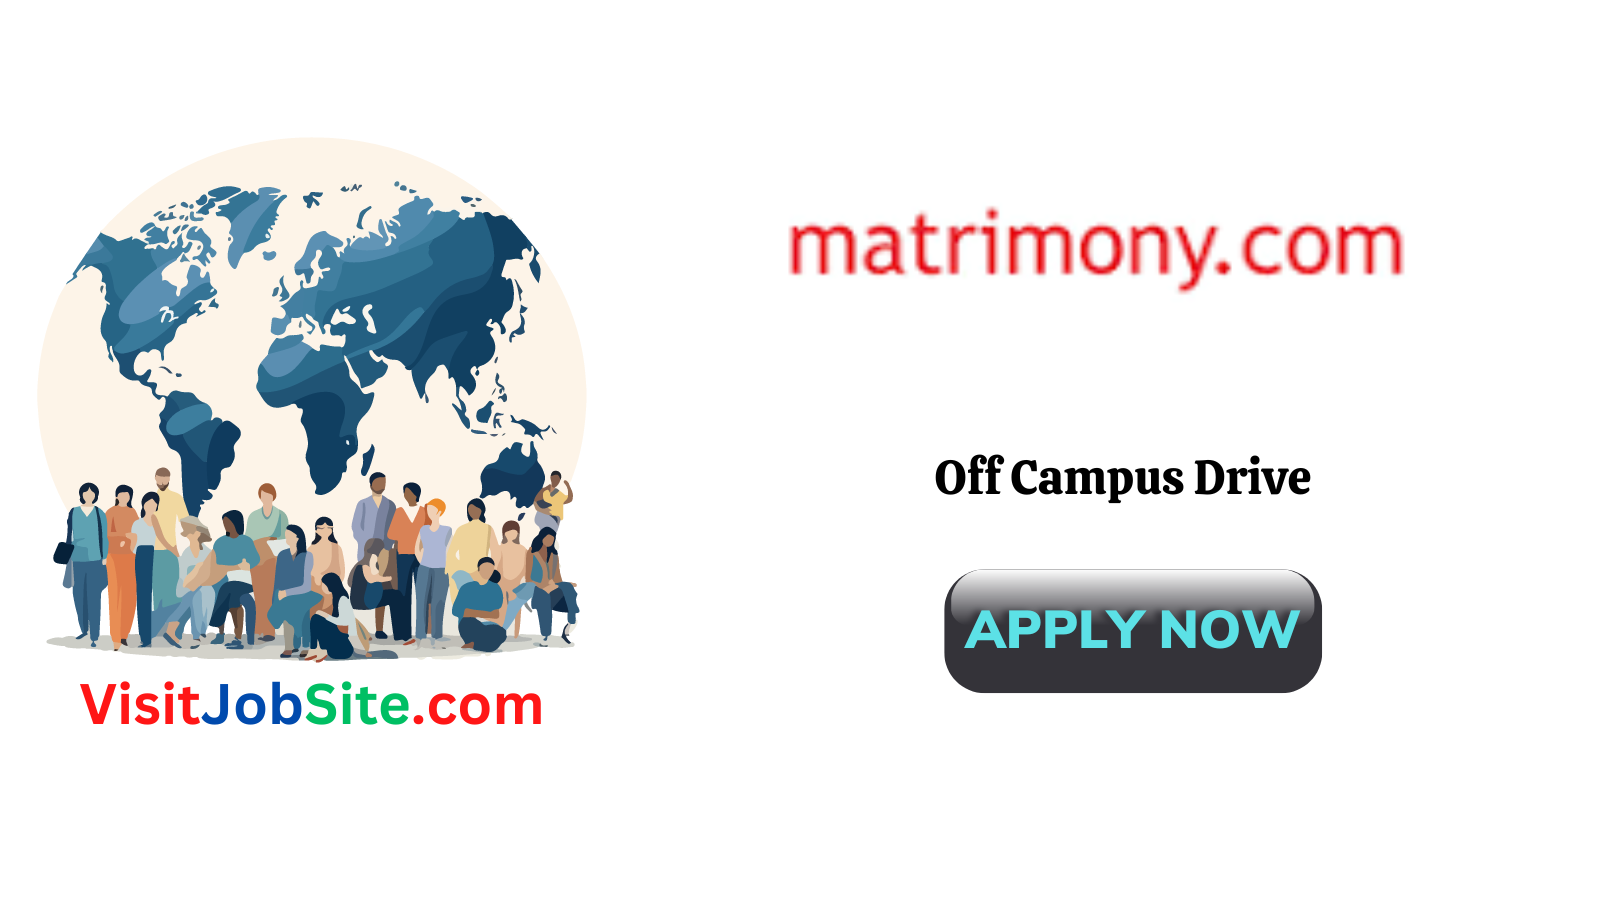 Matrimony.com Off Campus Drive